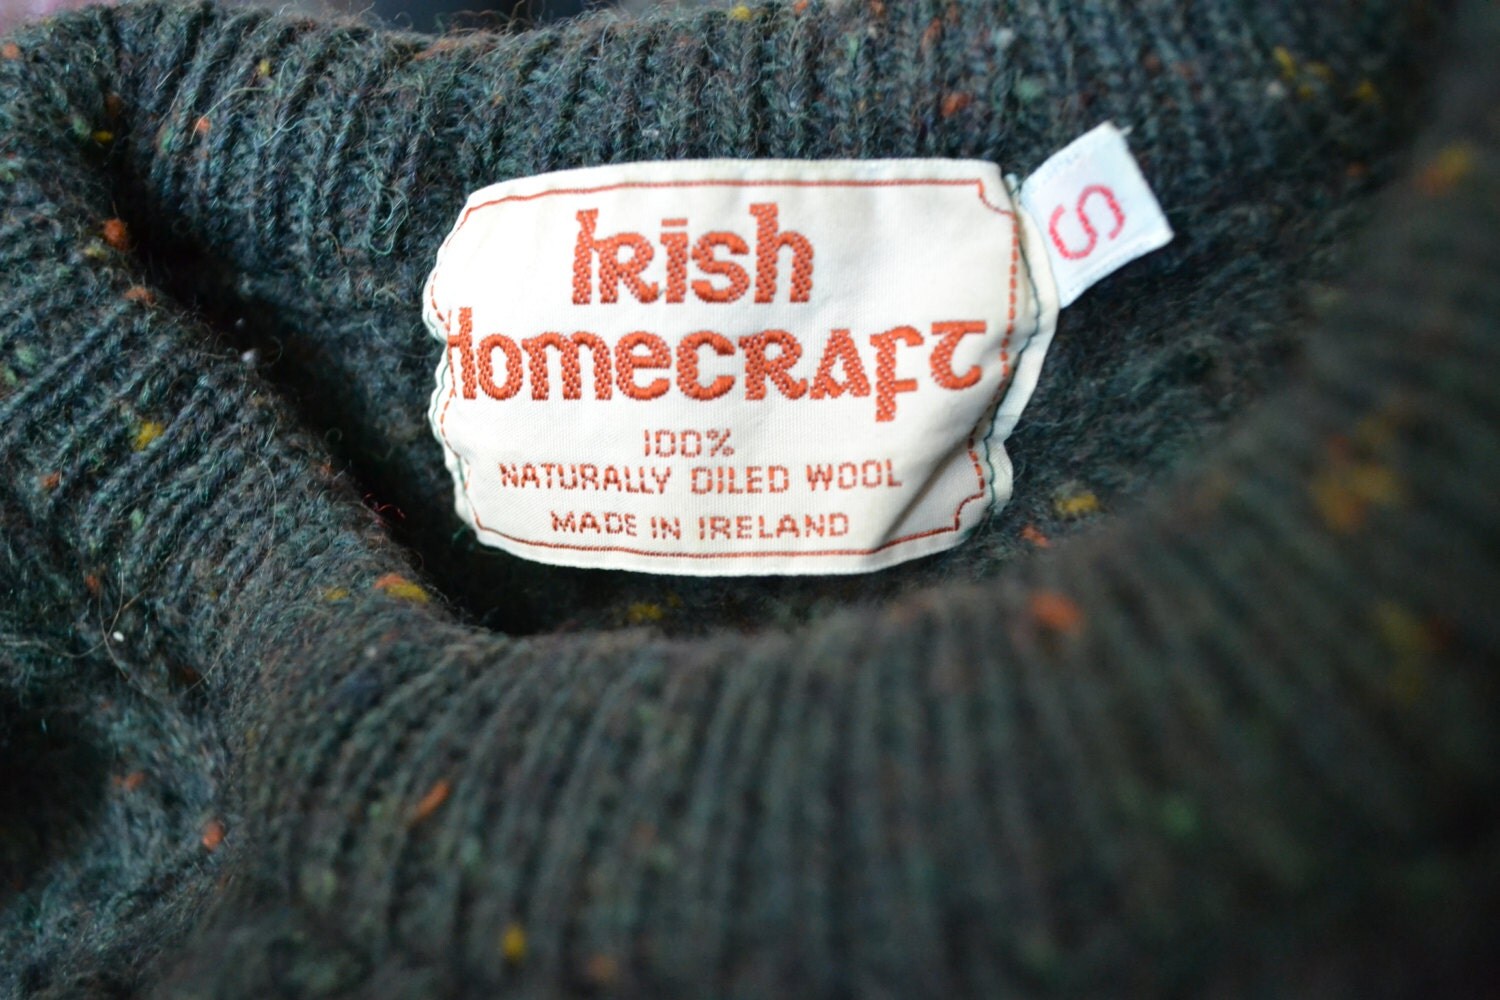 Irish Homecraft 100% naturally oiled wool vintage jumper in